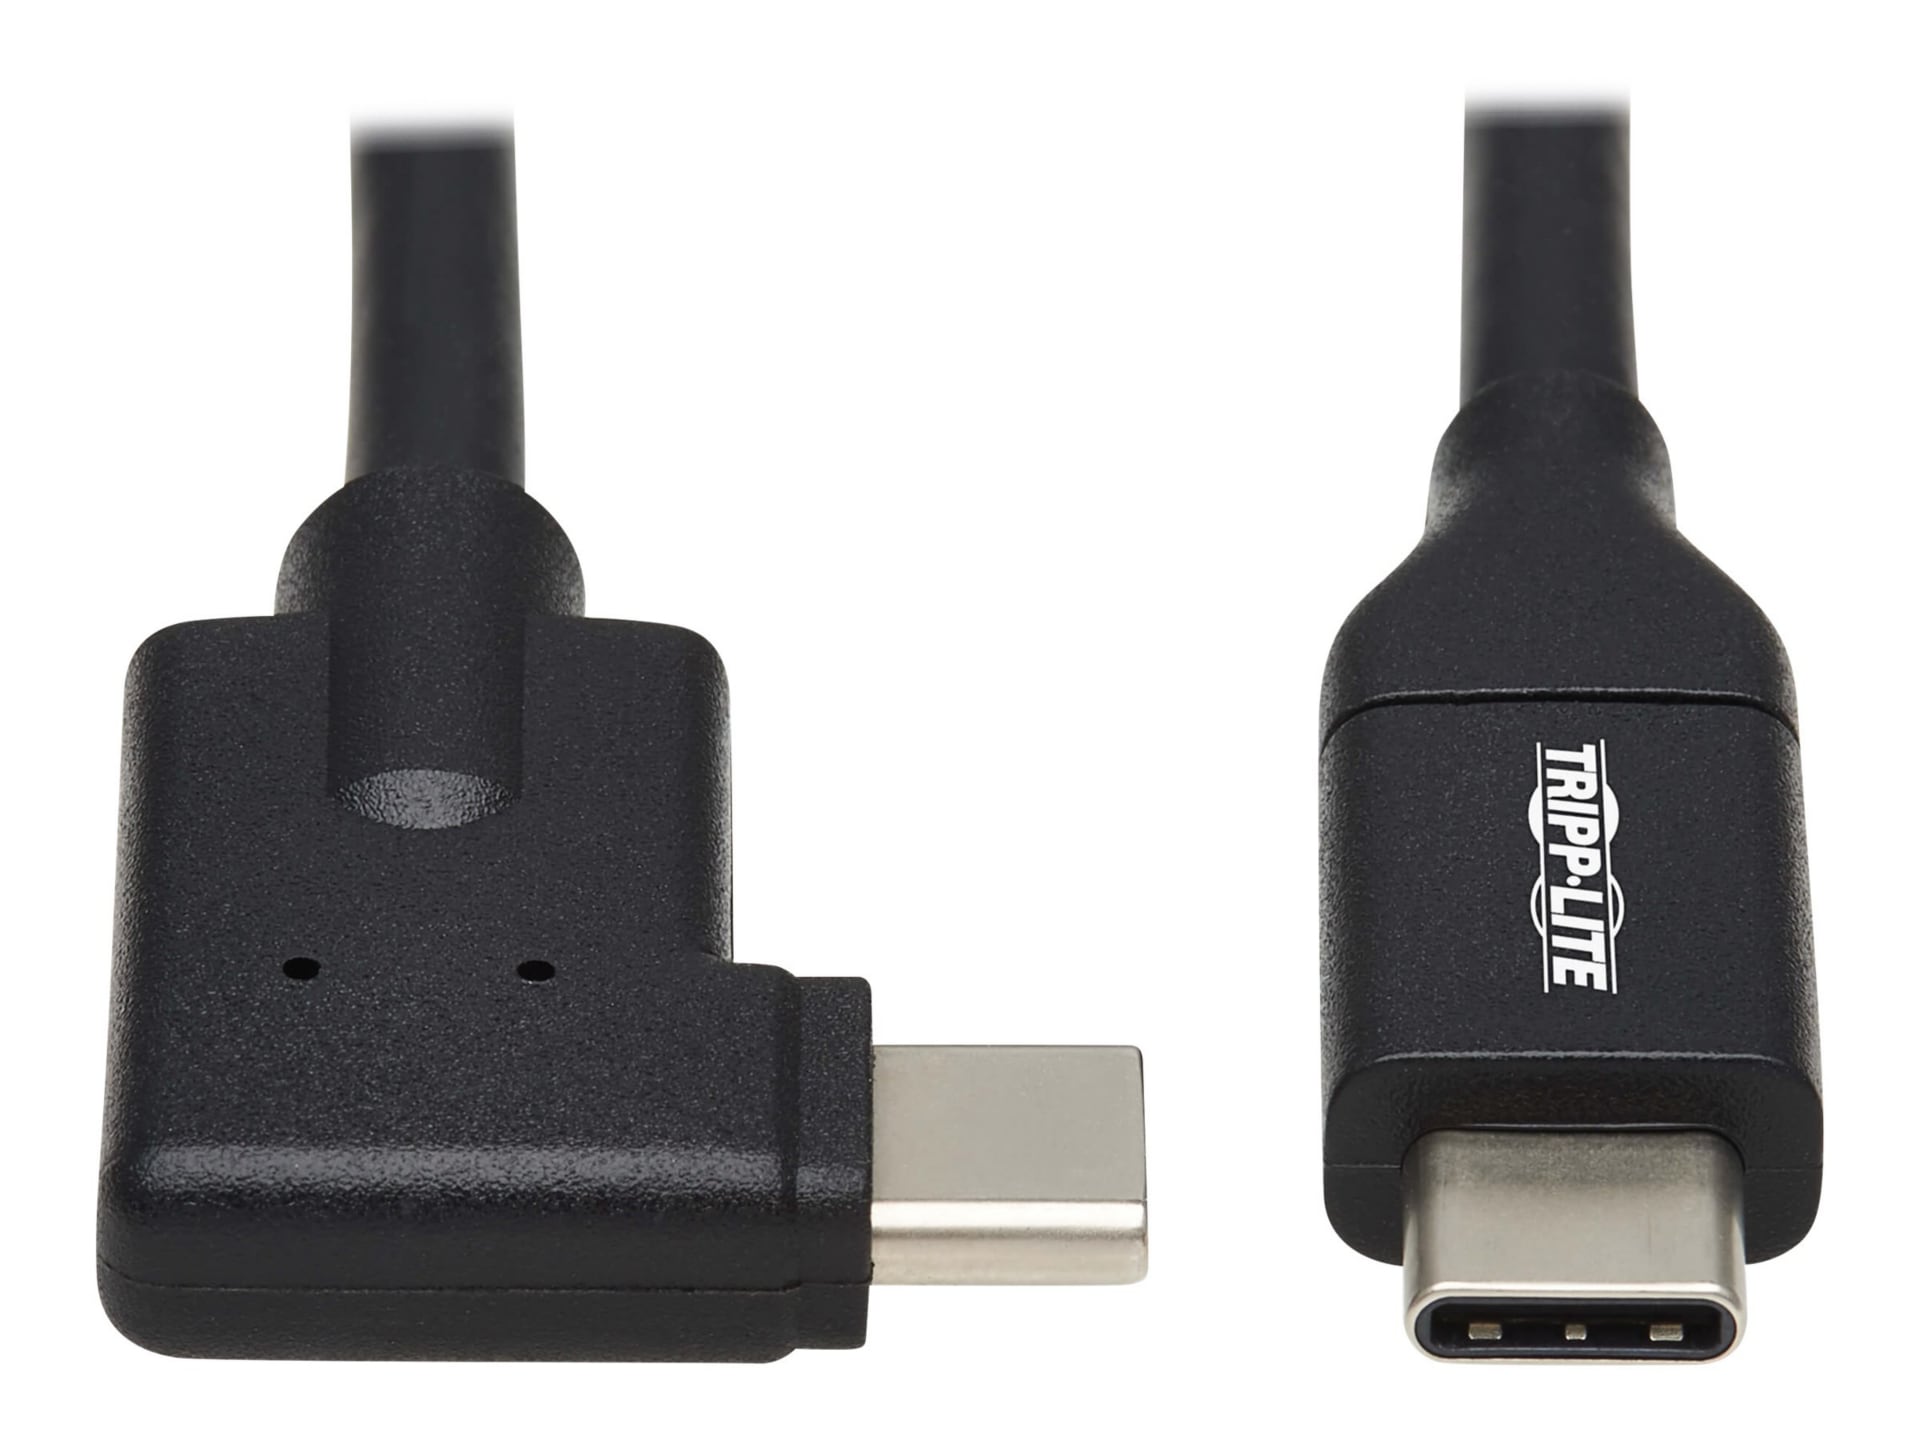 Tripp Lite USB C Cable (M/M) - USB 3.2 Gen 1, Thunderbolt 3, 60W PD Charging, Right-Angle Plug, Black, 1 ft. (0.3 m) -